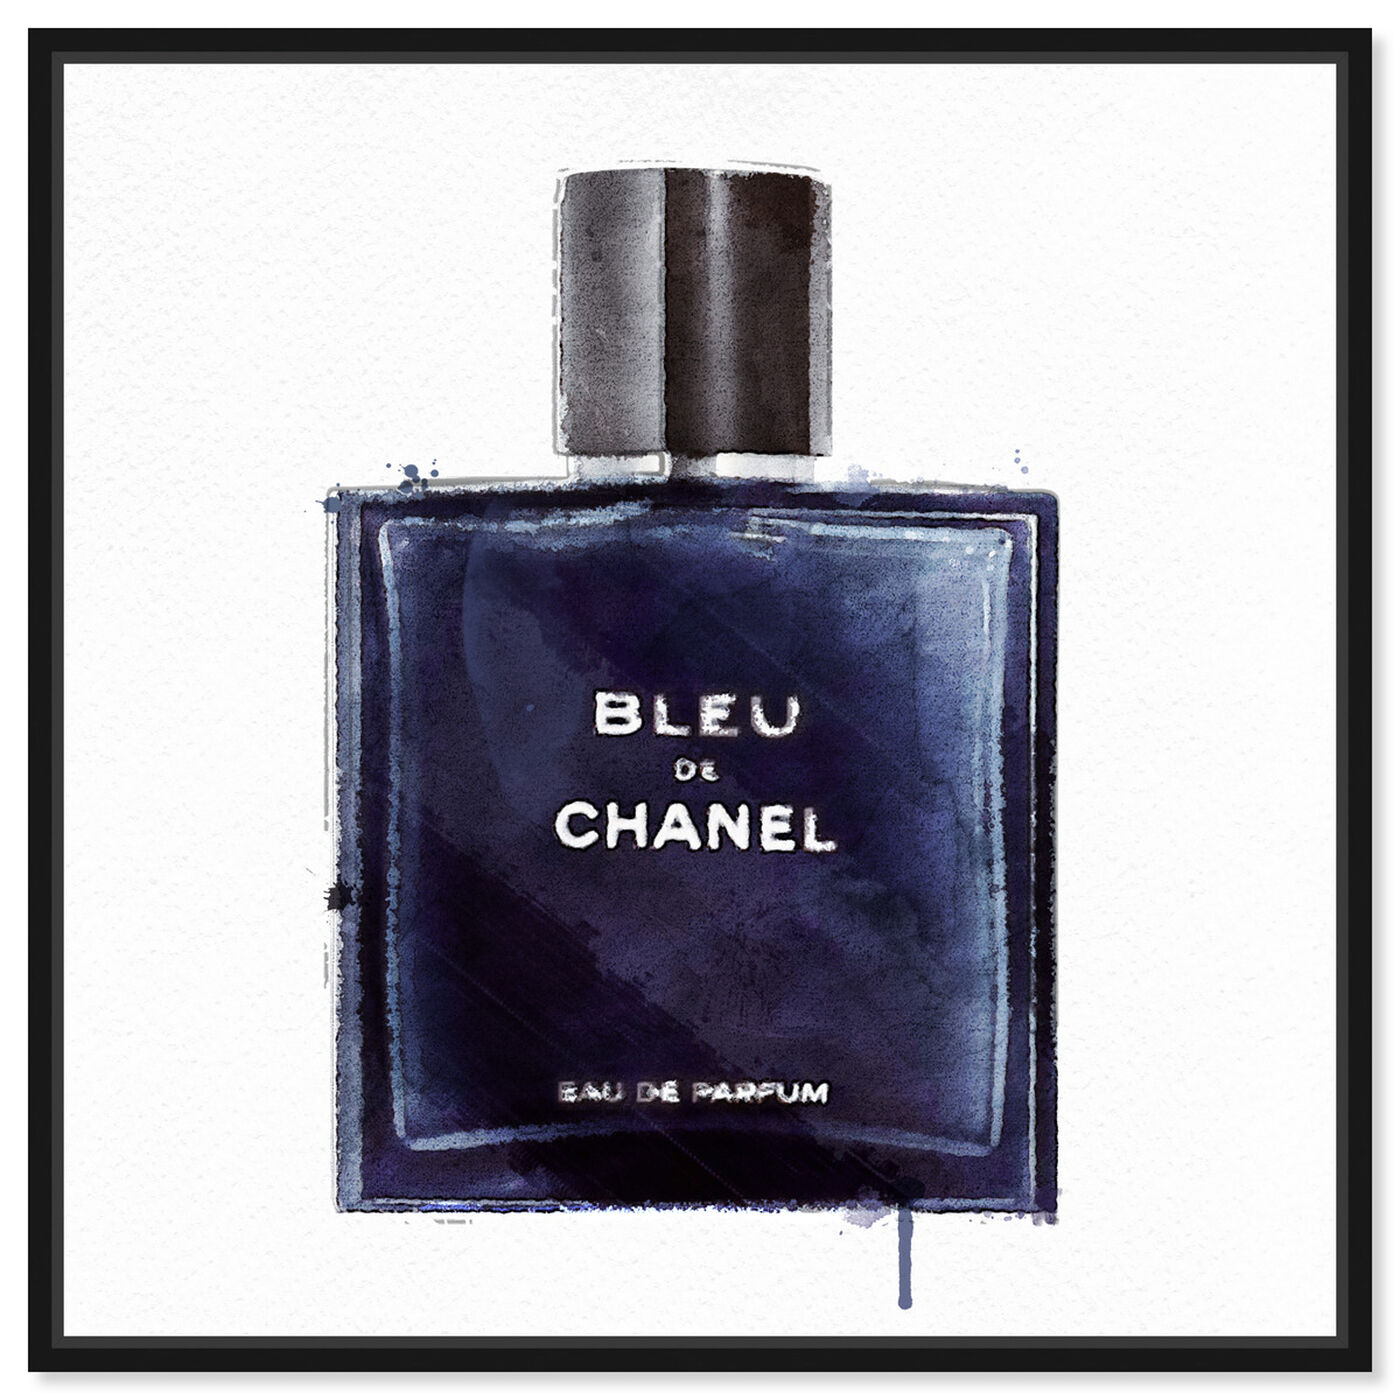 bleu chanel parfum for men